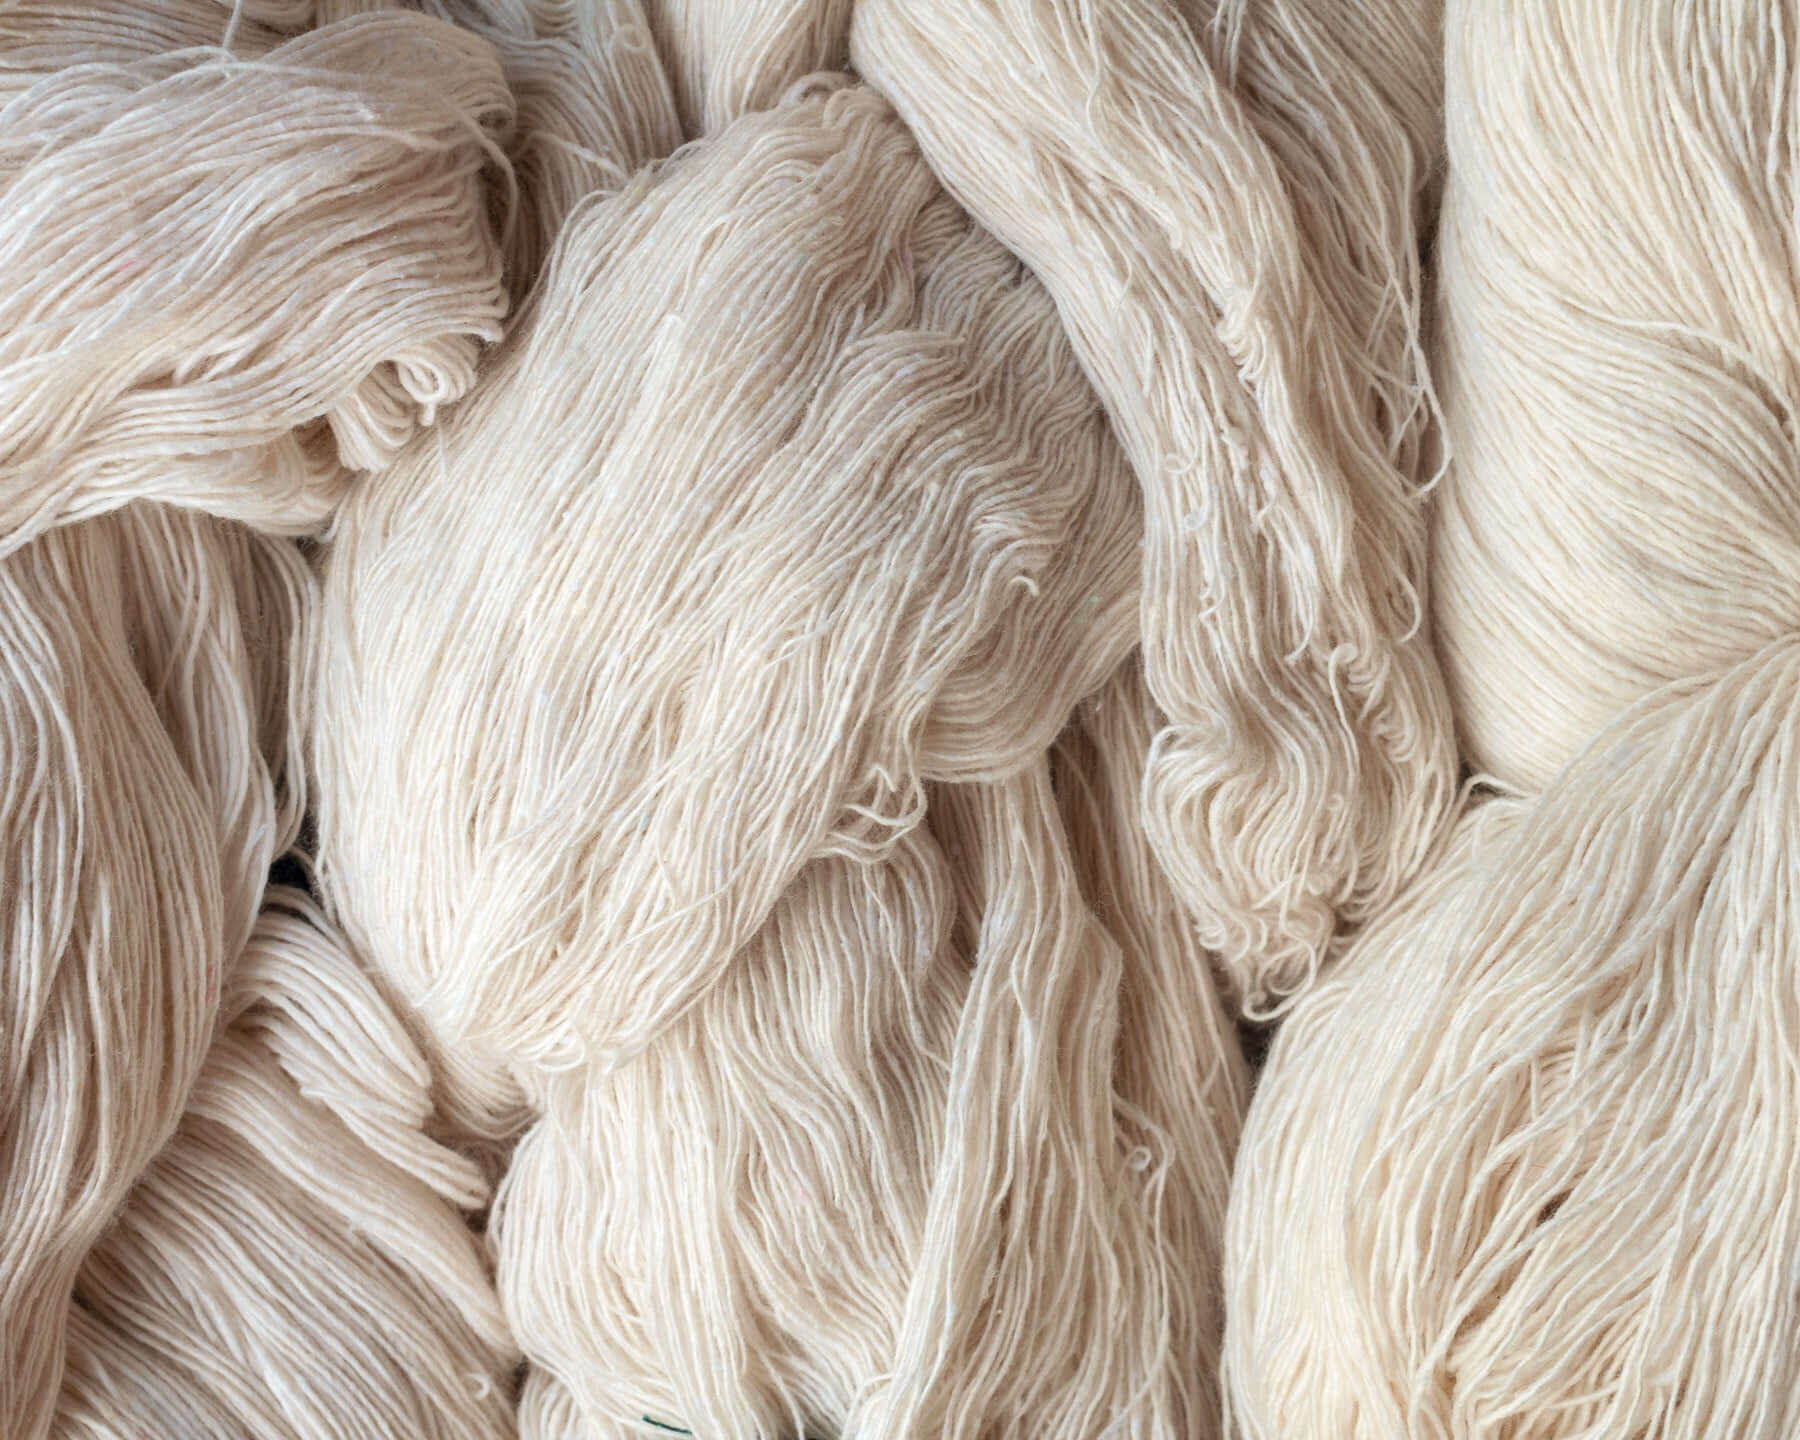 Raw cotton yarn